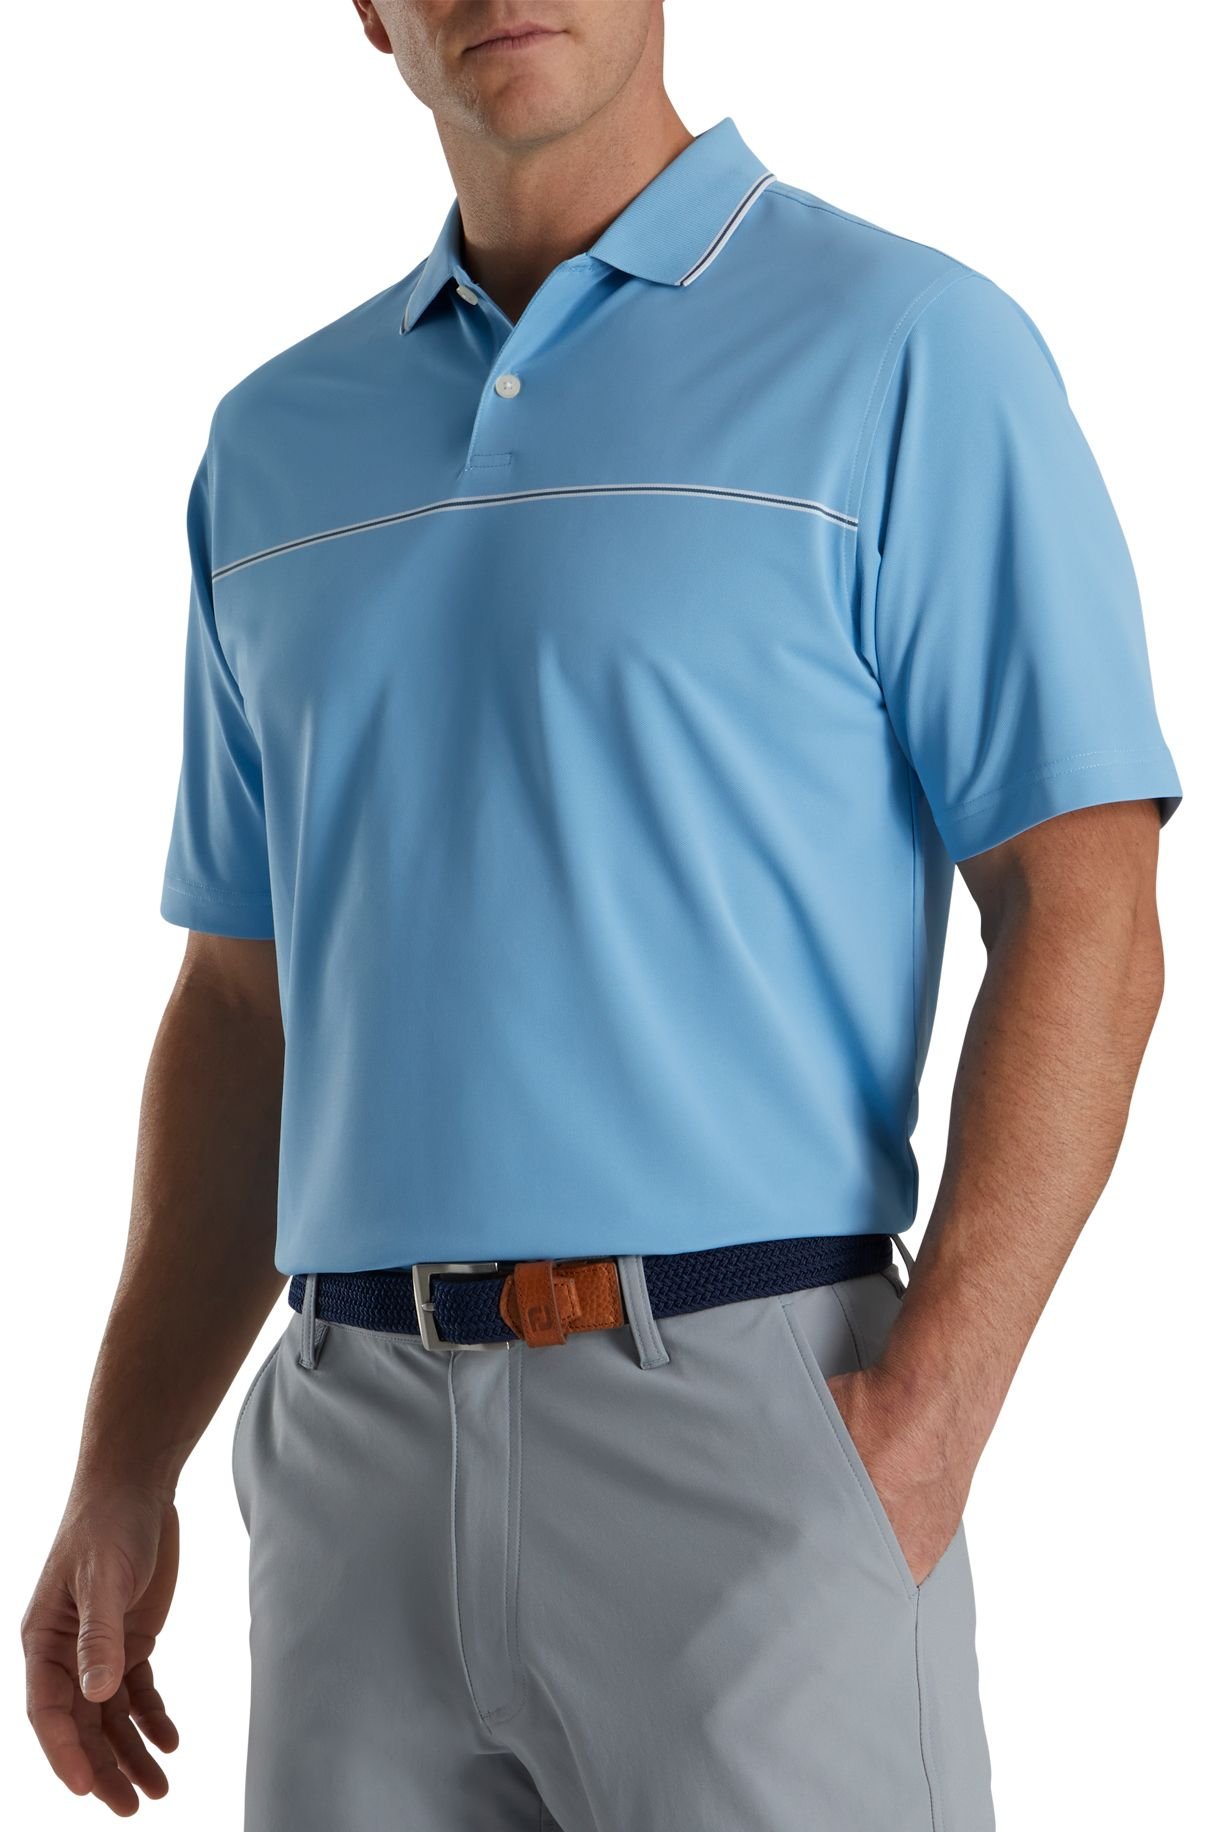 FootJoy Details Stretch Pique Knit Collar Golf Polo Dusk Blue - Carl's Golfland